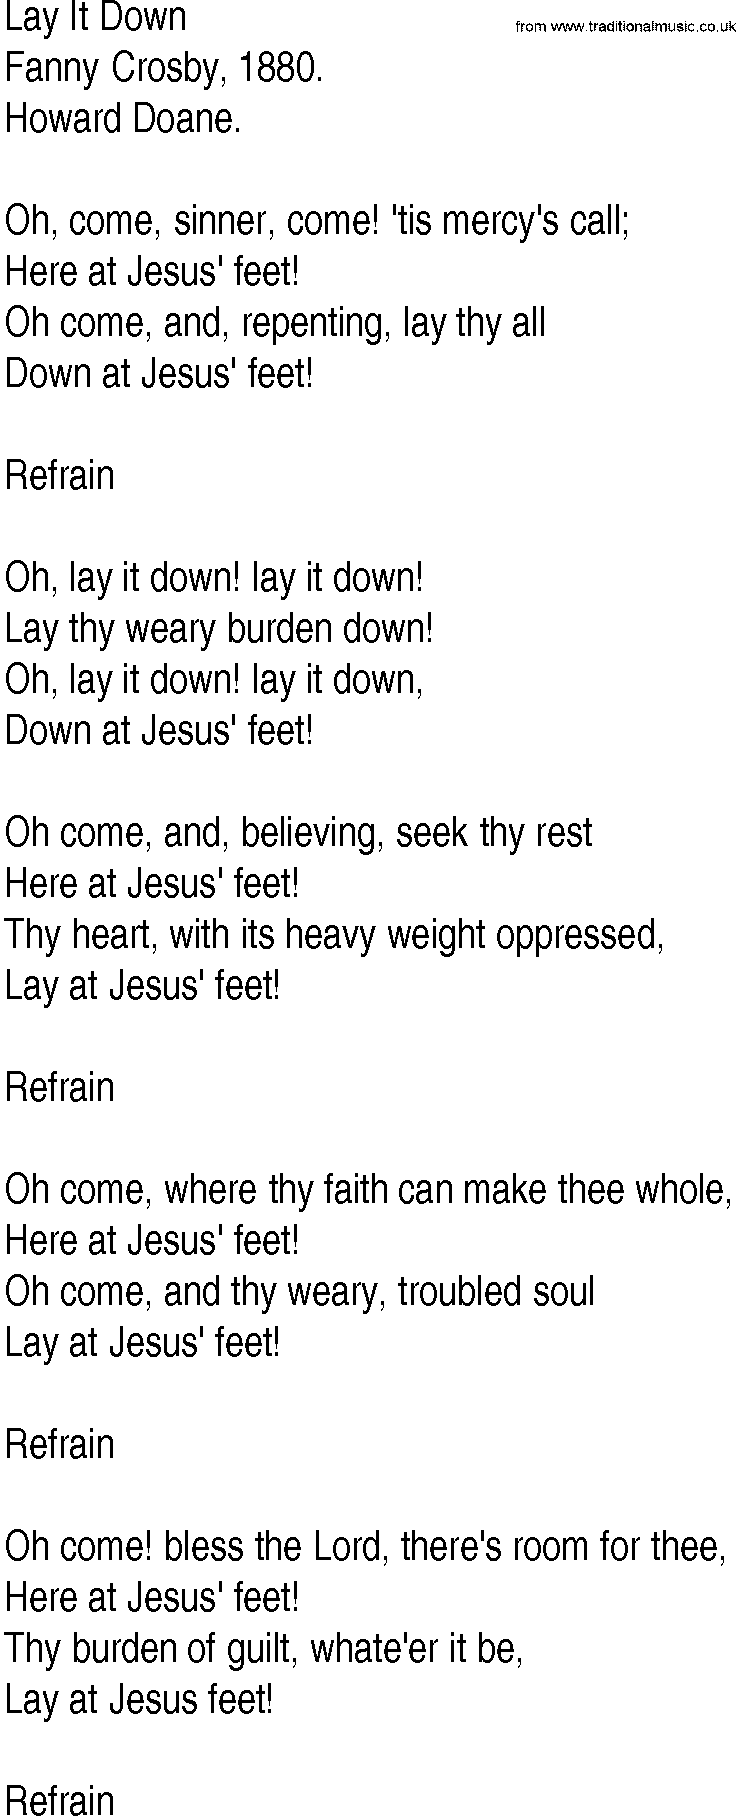 Hymn and Gospel Song: Lay It Down by Fanny Crosby lyrics